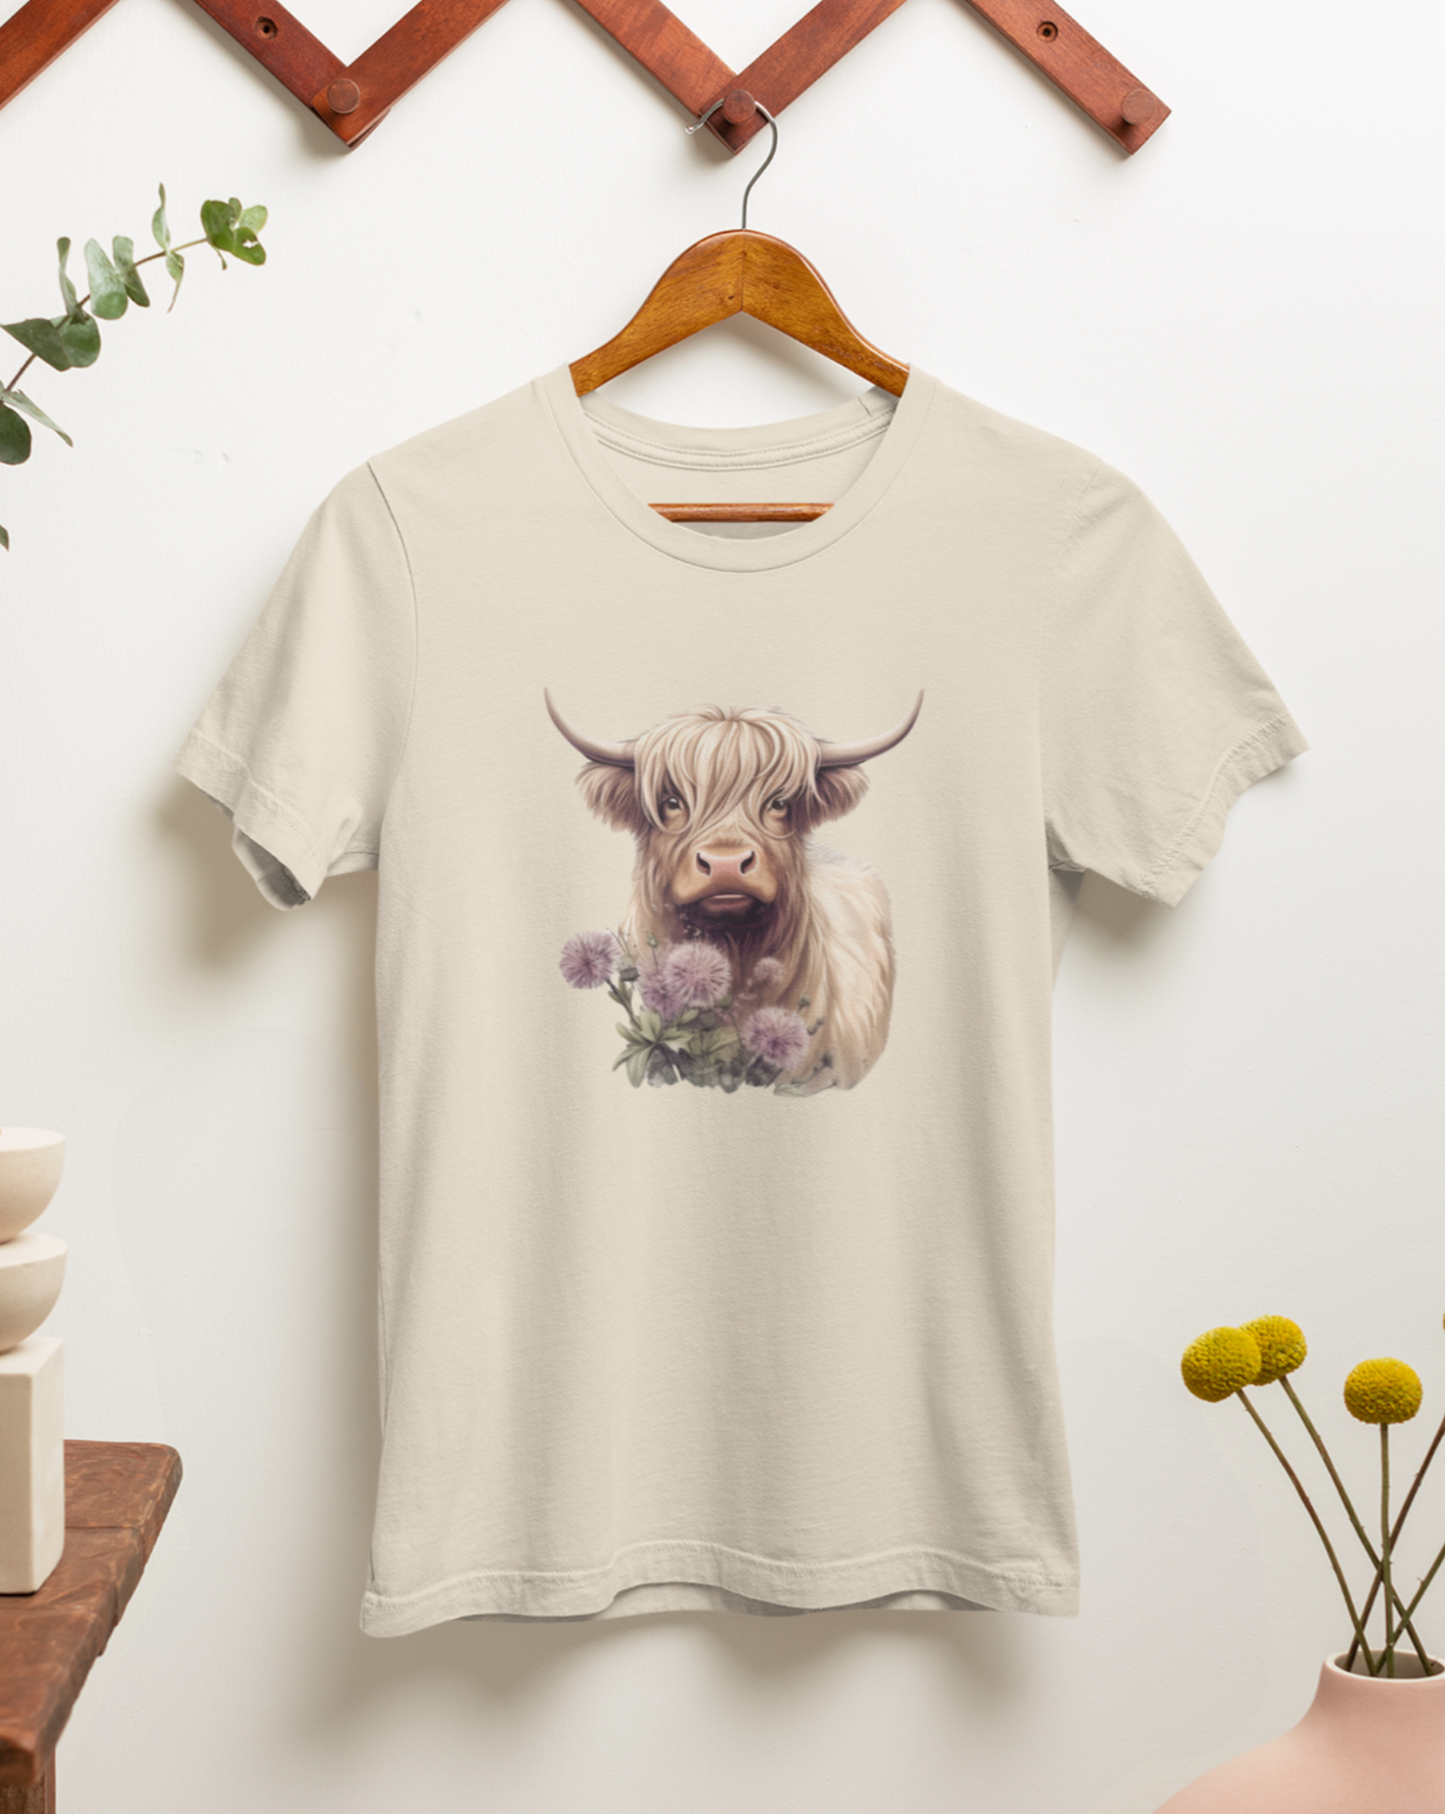 Highland cow shirt